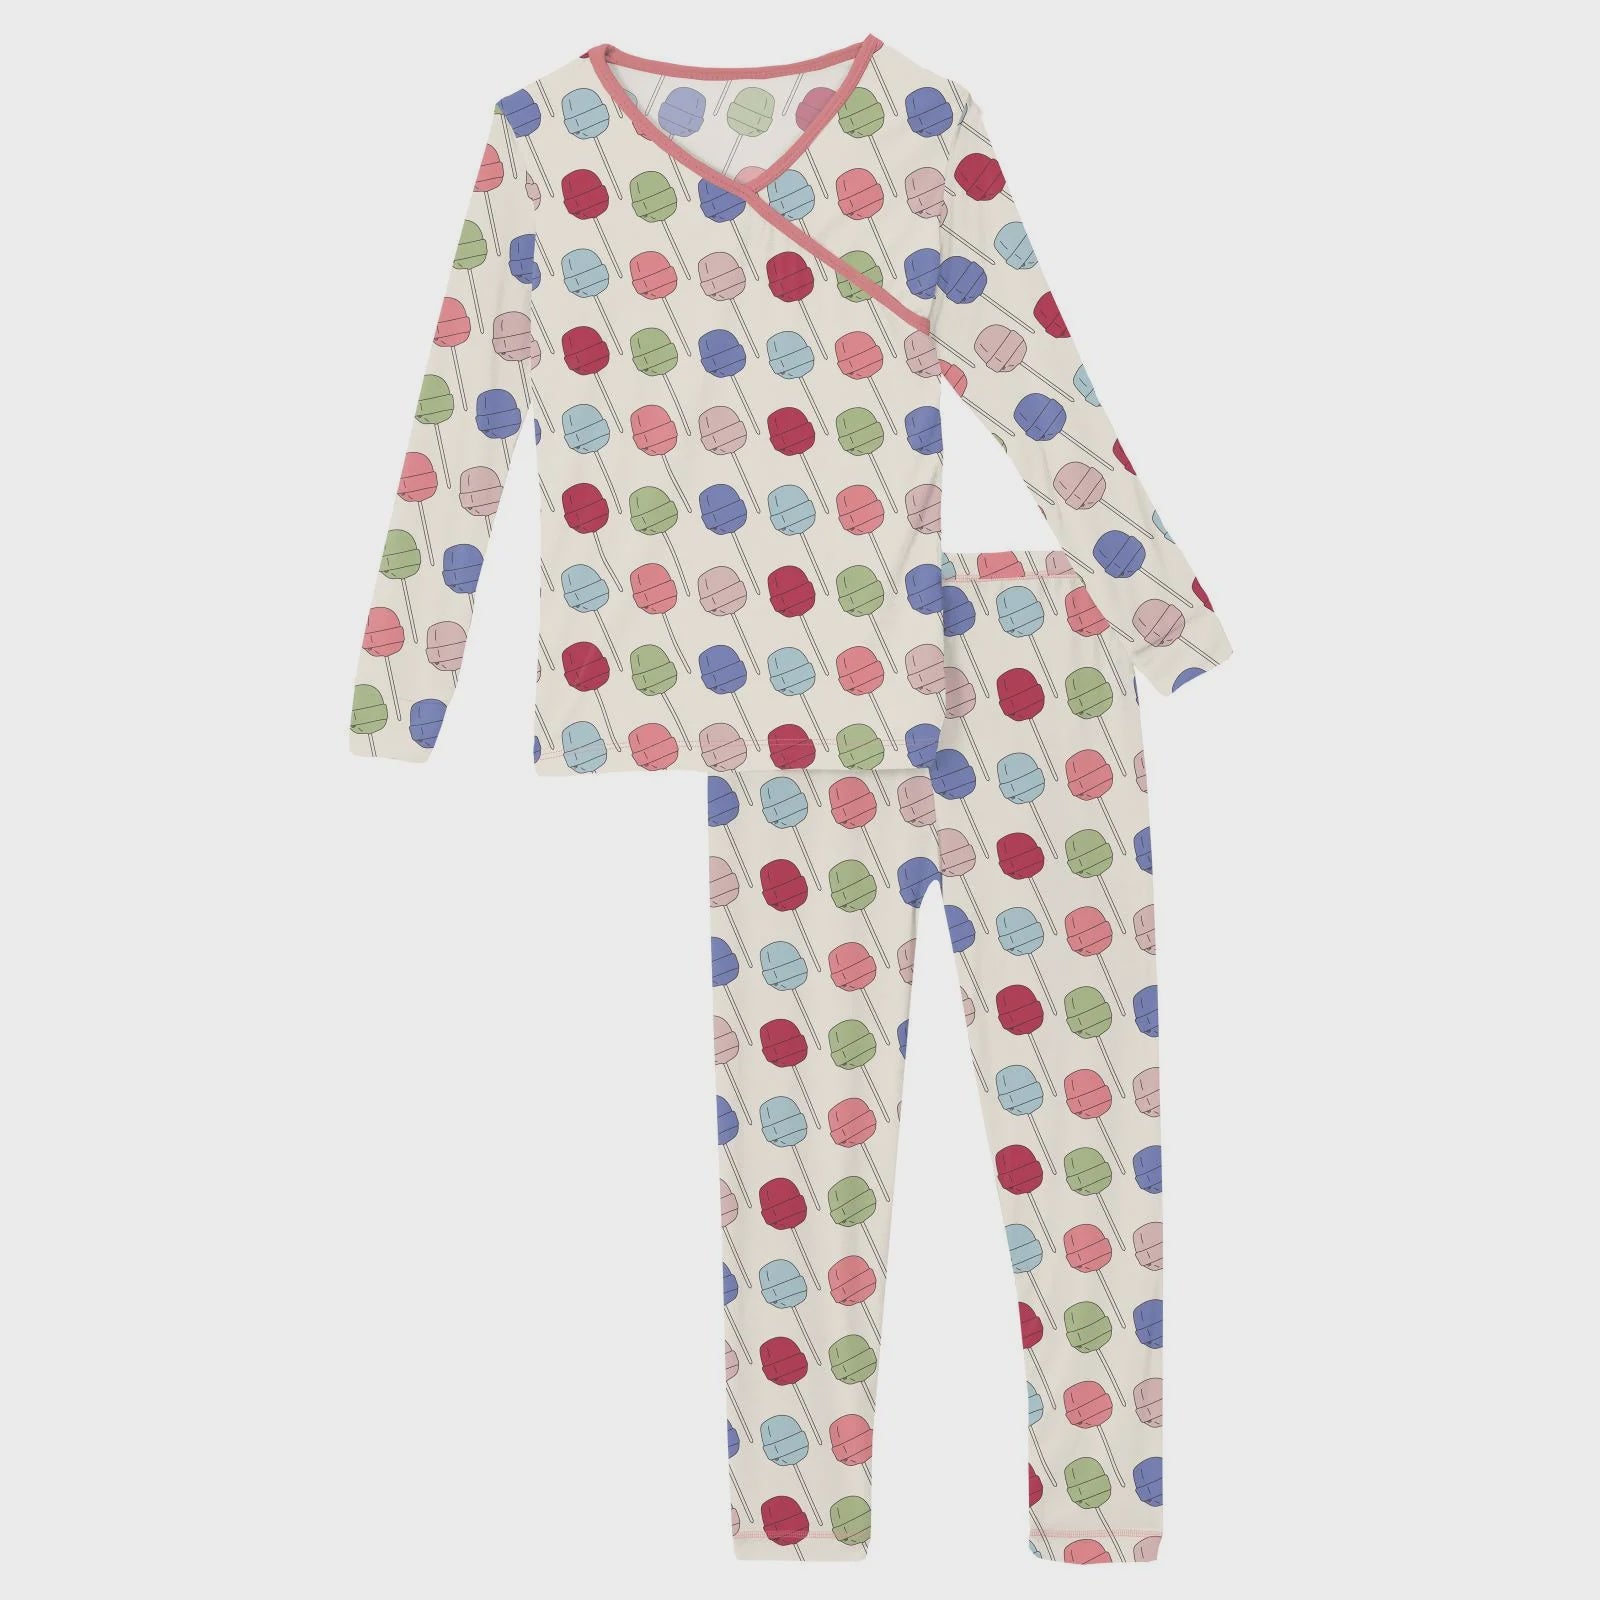 Lula's Lollipop's LS Kimono  Pajama Set